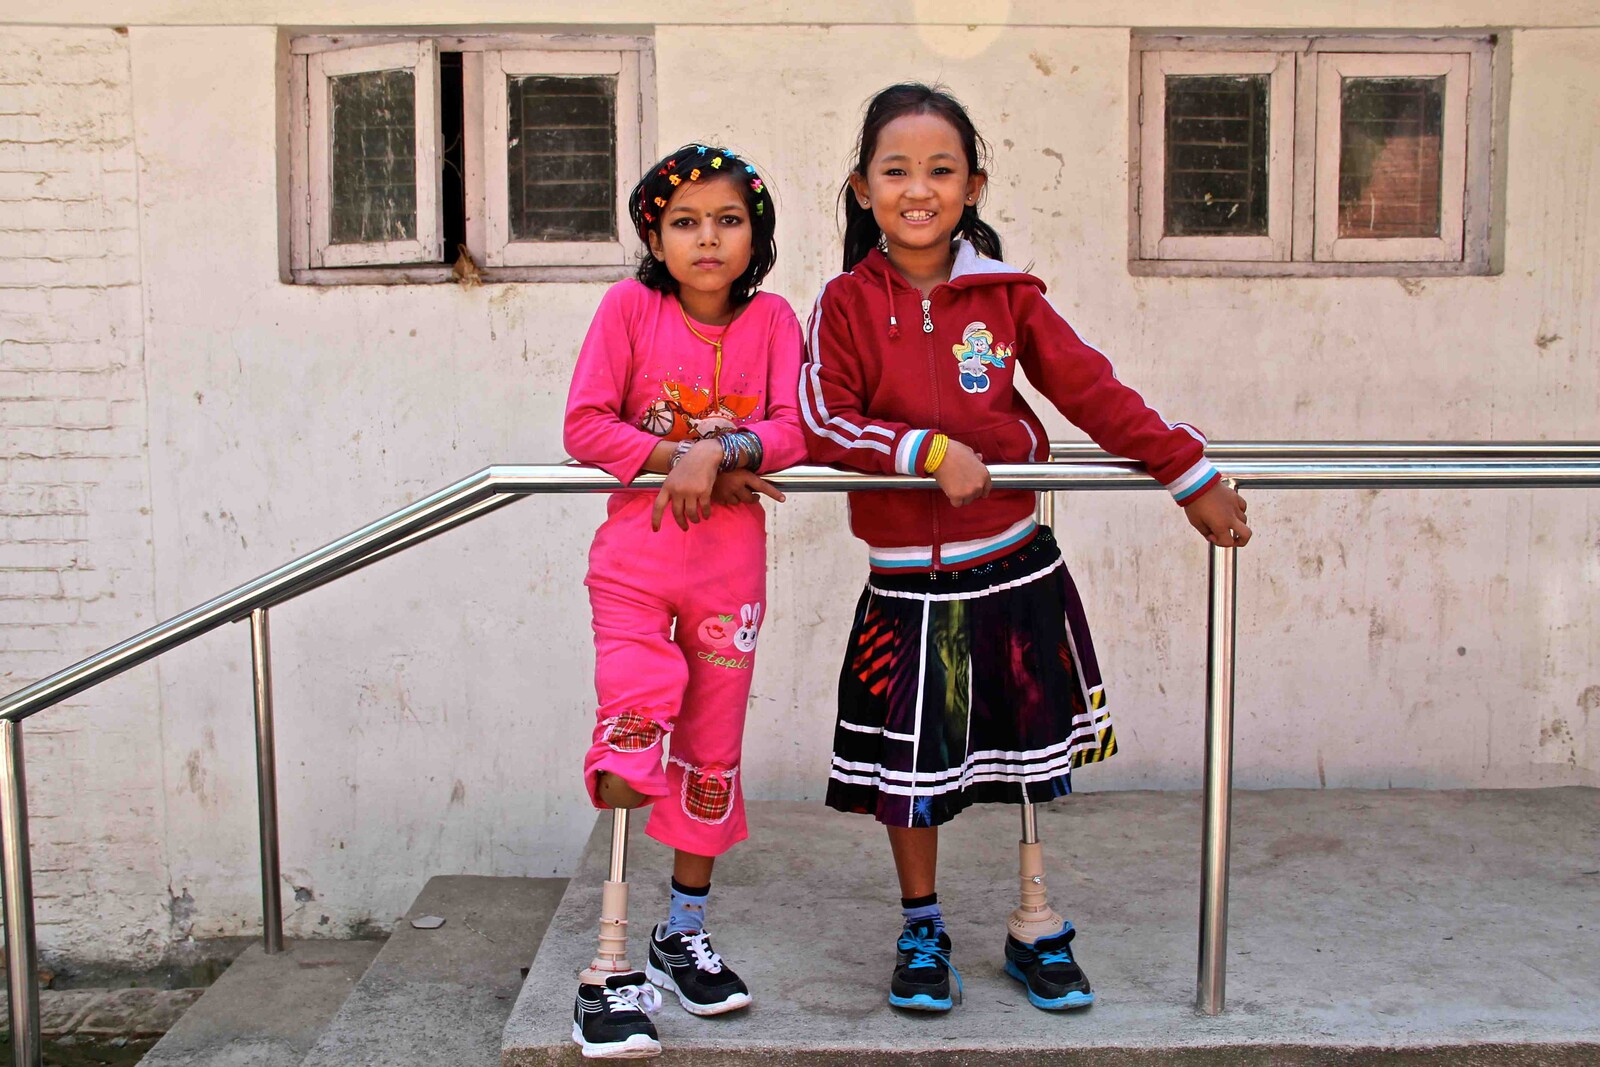 Erdbeben Nepal Kinder Prothesen Verletzung Mädchen